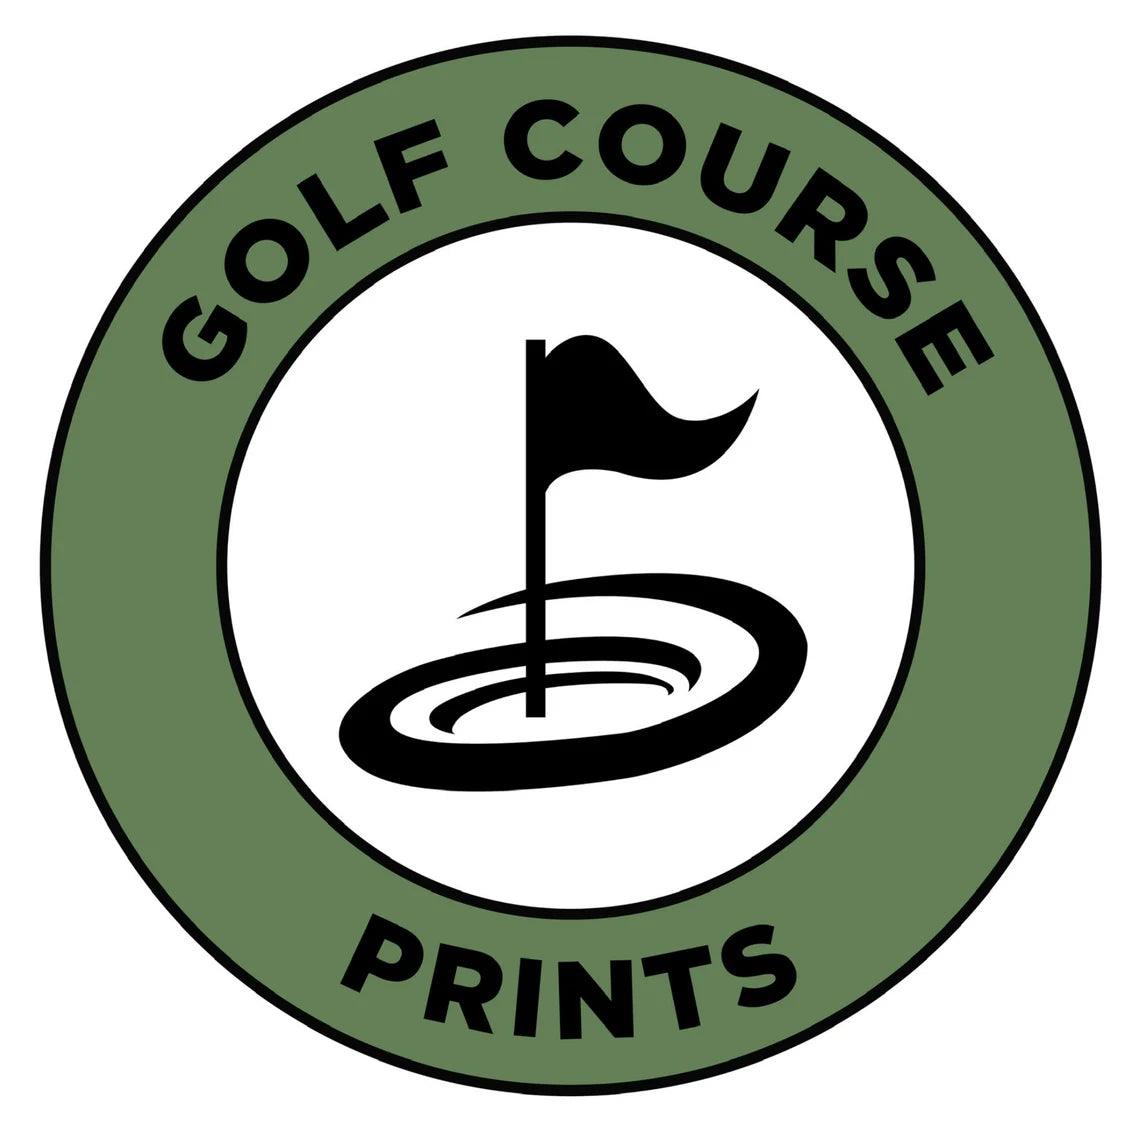 TPC San Antonio Oaks Course, Texas - Printed Golf Courses